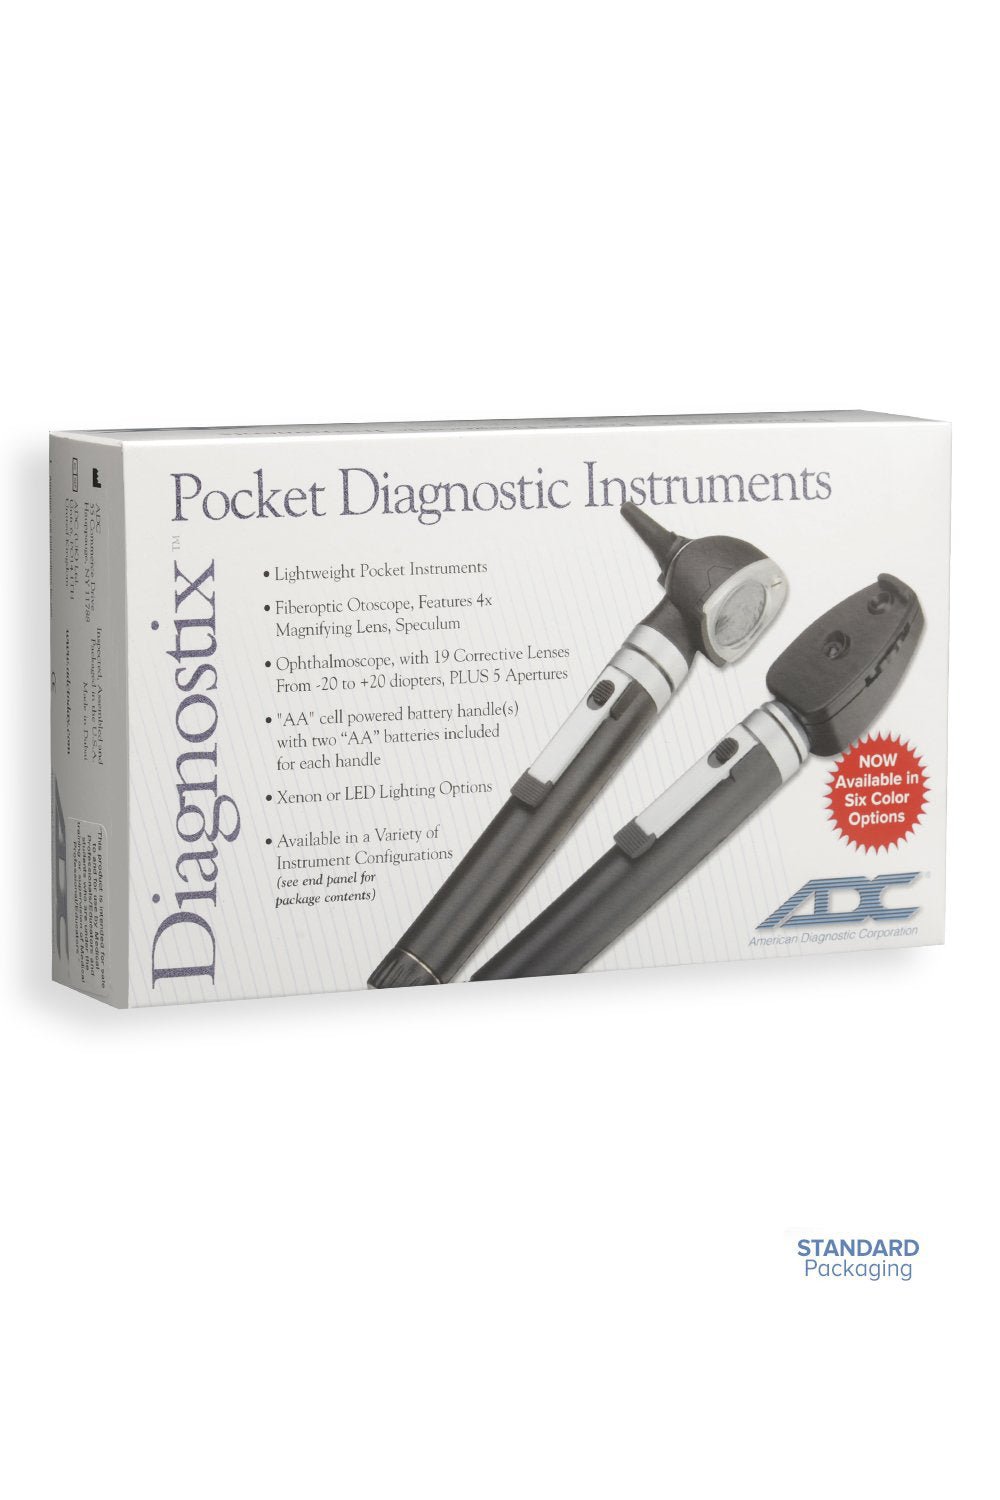 products-pocketdiagnosticinstrumentspackage-987232-jpg